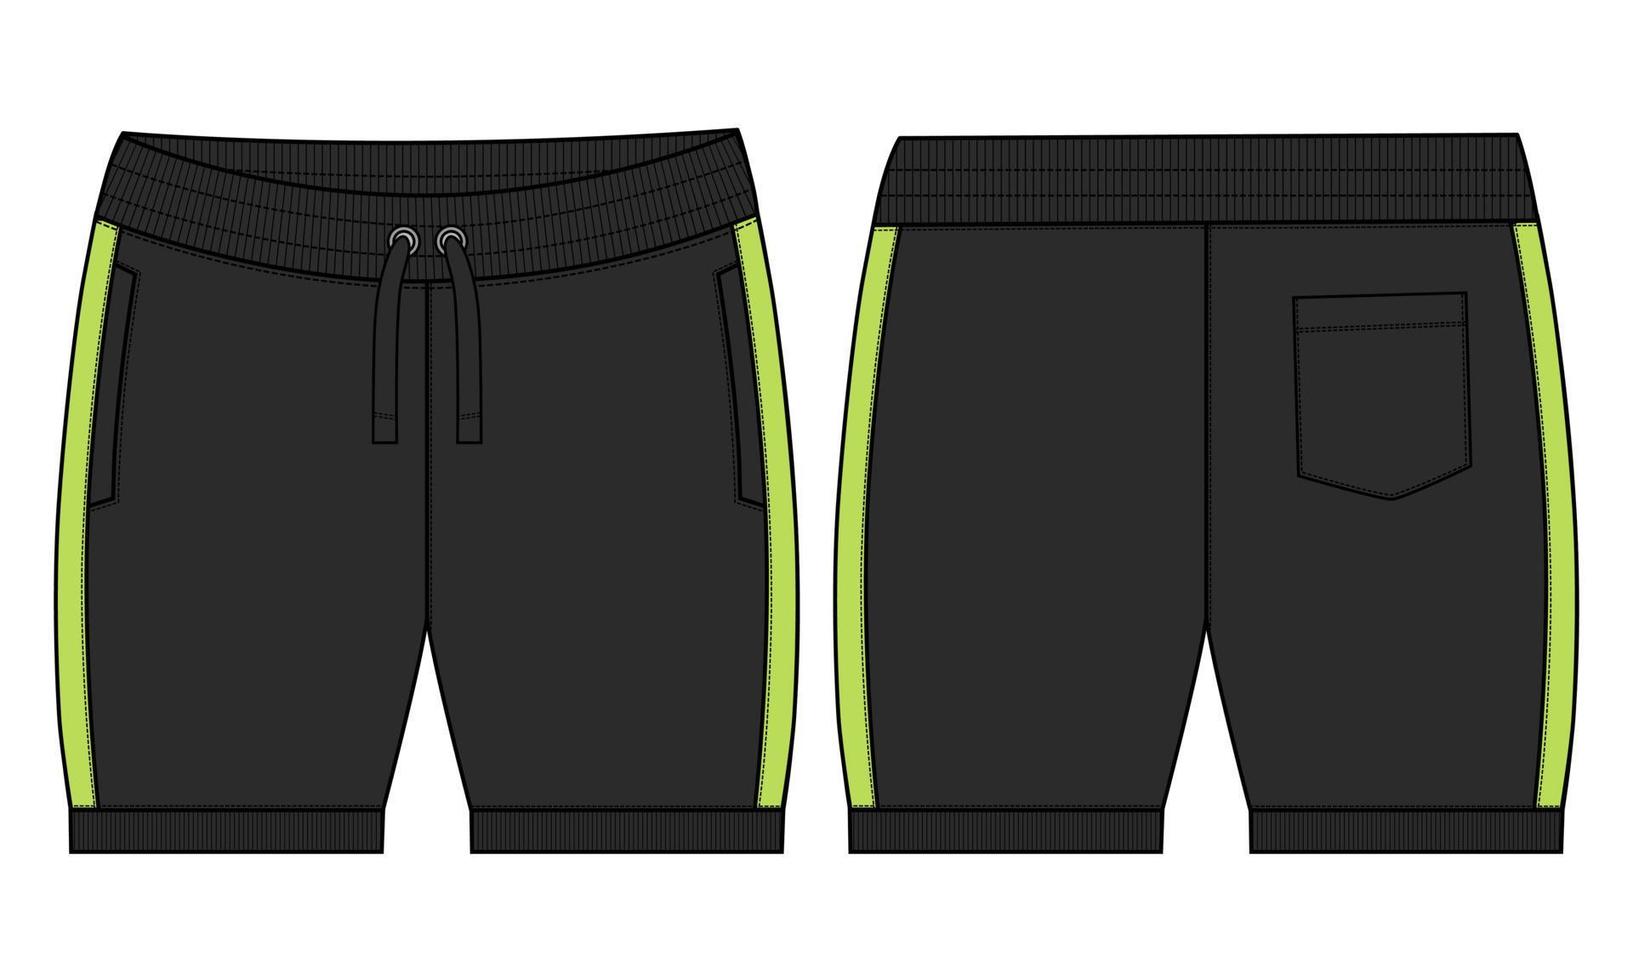 zweet Jersey shorts hijgen vector mode vlak schetsen sjabloon.